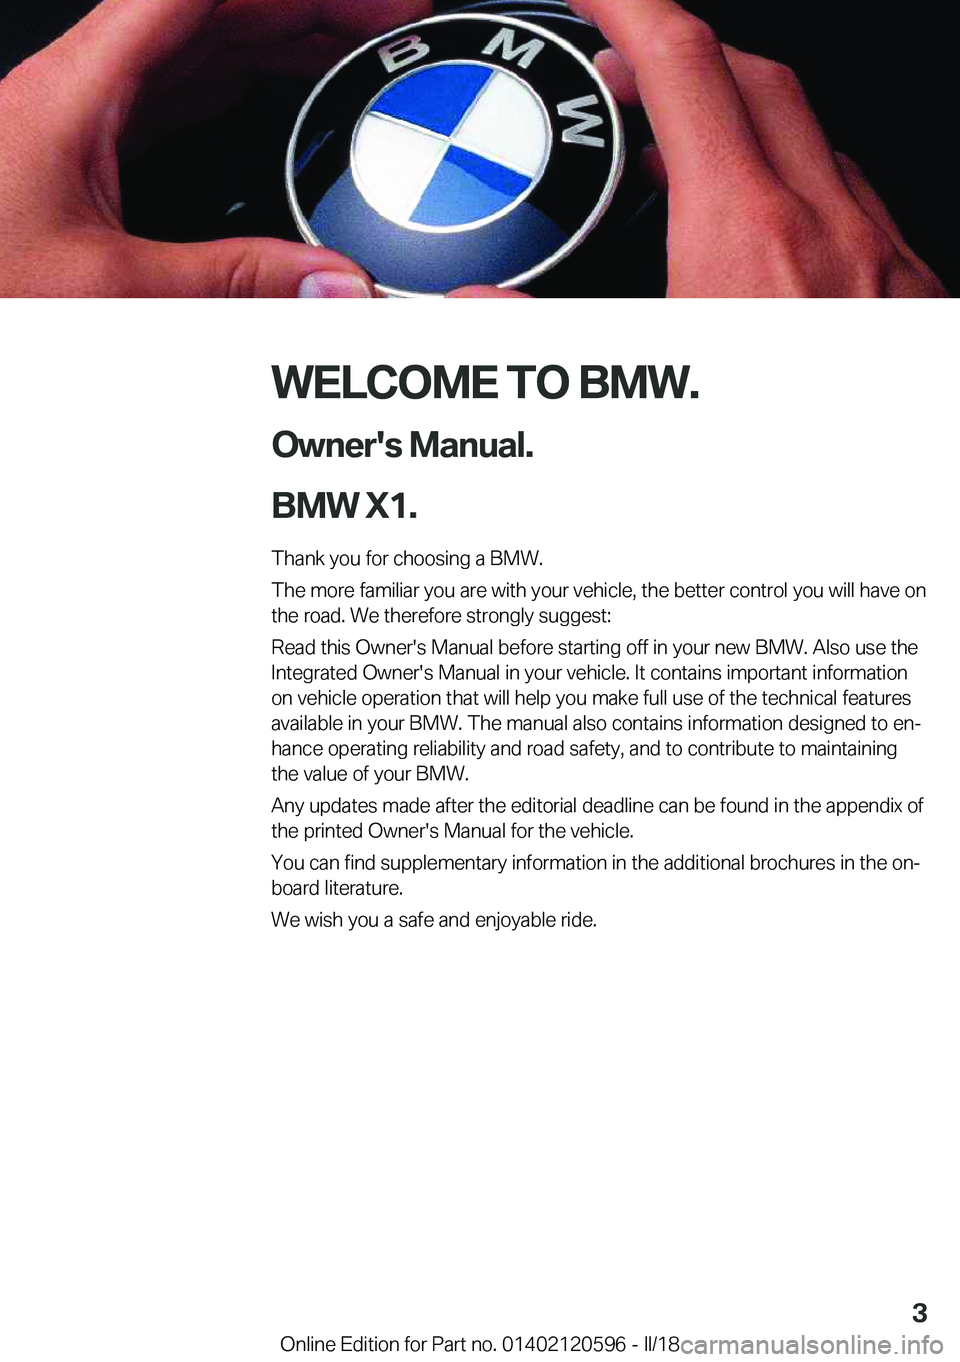 BMW X1 2018  Owners Manual �W�E�L�C�O�M�E��T�O��B�M�W�.�O�w�n�e�r�'�s��M�a�n�u�a�l�.
�B�M�W��X�1�.
�T�h�a�n�k� �y�o�u� �f�o�r� �c�h�o�o�s�i�n�g� �a� �B�M�W�.
�T�h�e� �m�o�r�e� �f�a�m�i�l�i�a�r� �y�o�u� �a�r�e� �w�i�t�h�